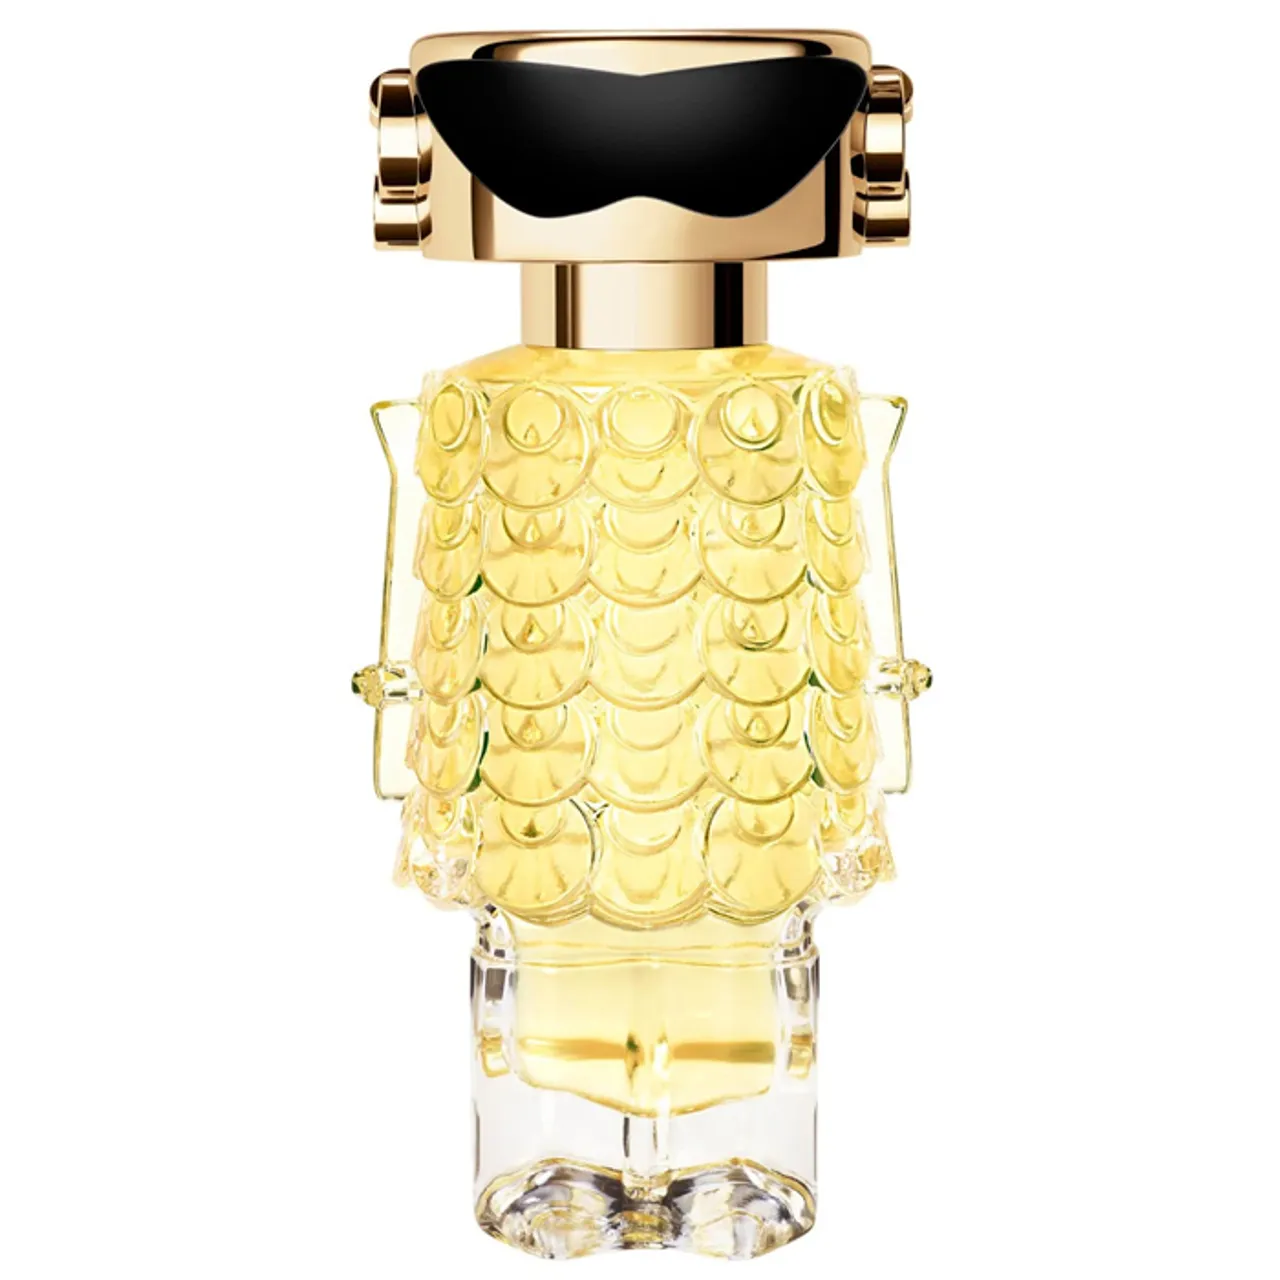 Fame parfum spray 30 ml